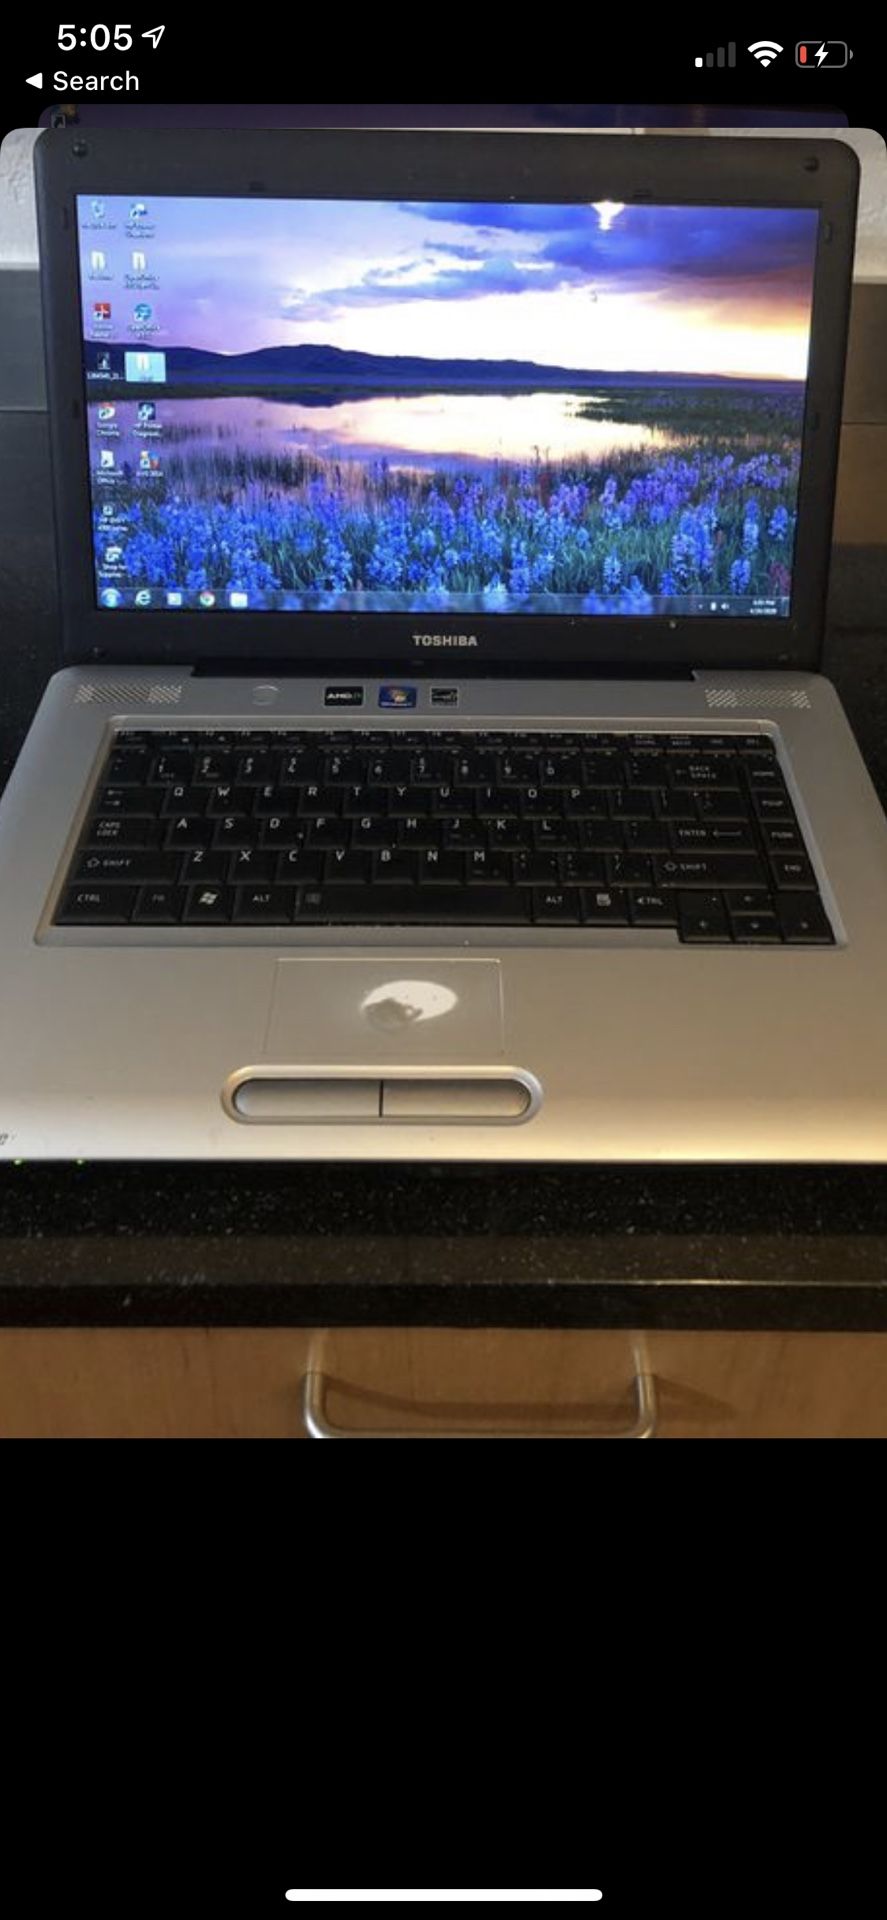 Toshiba laptop with Window 7